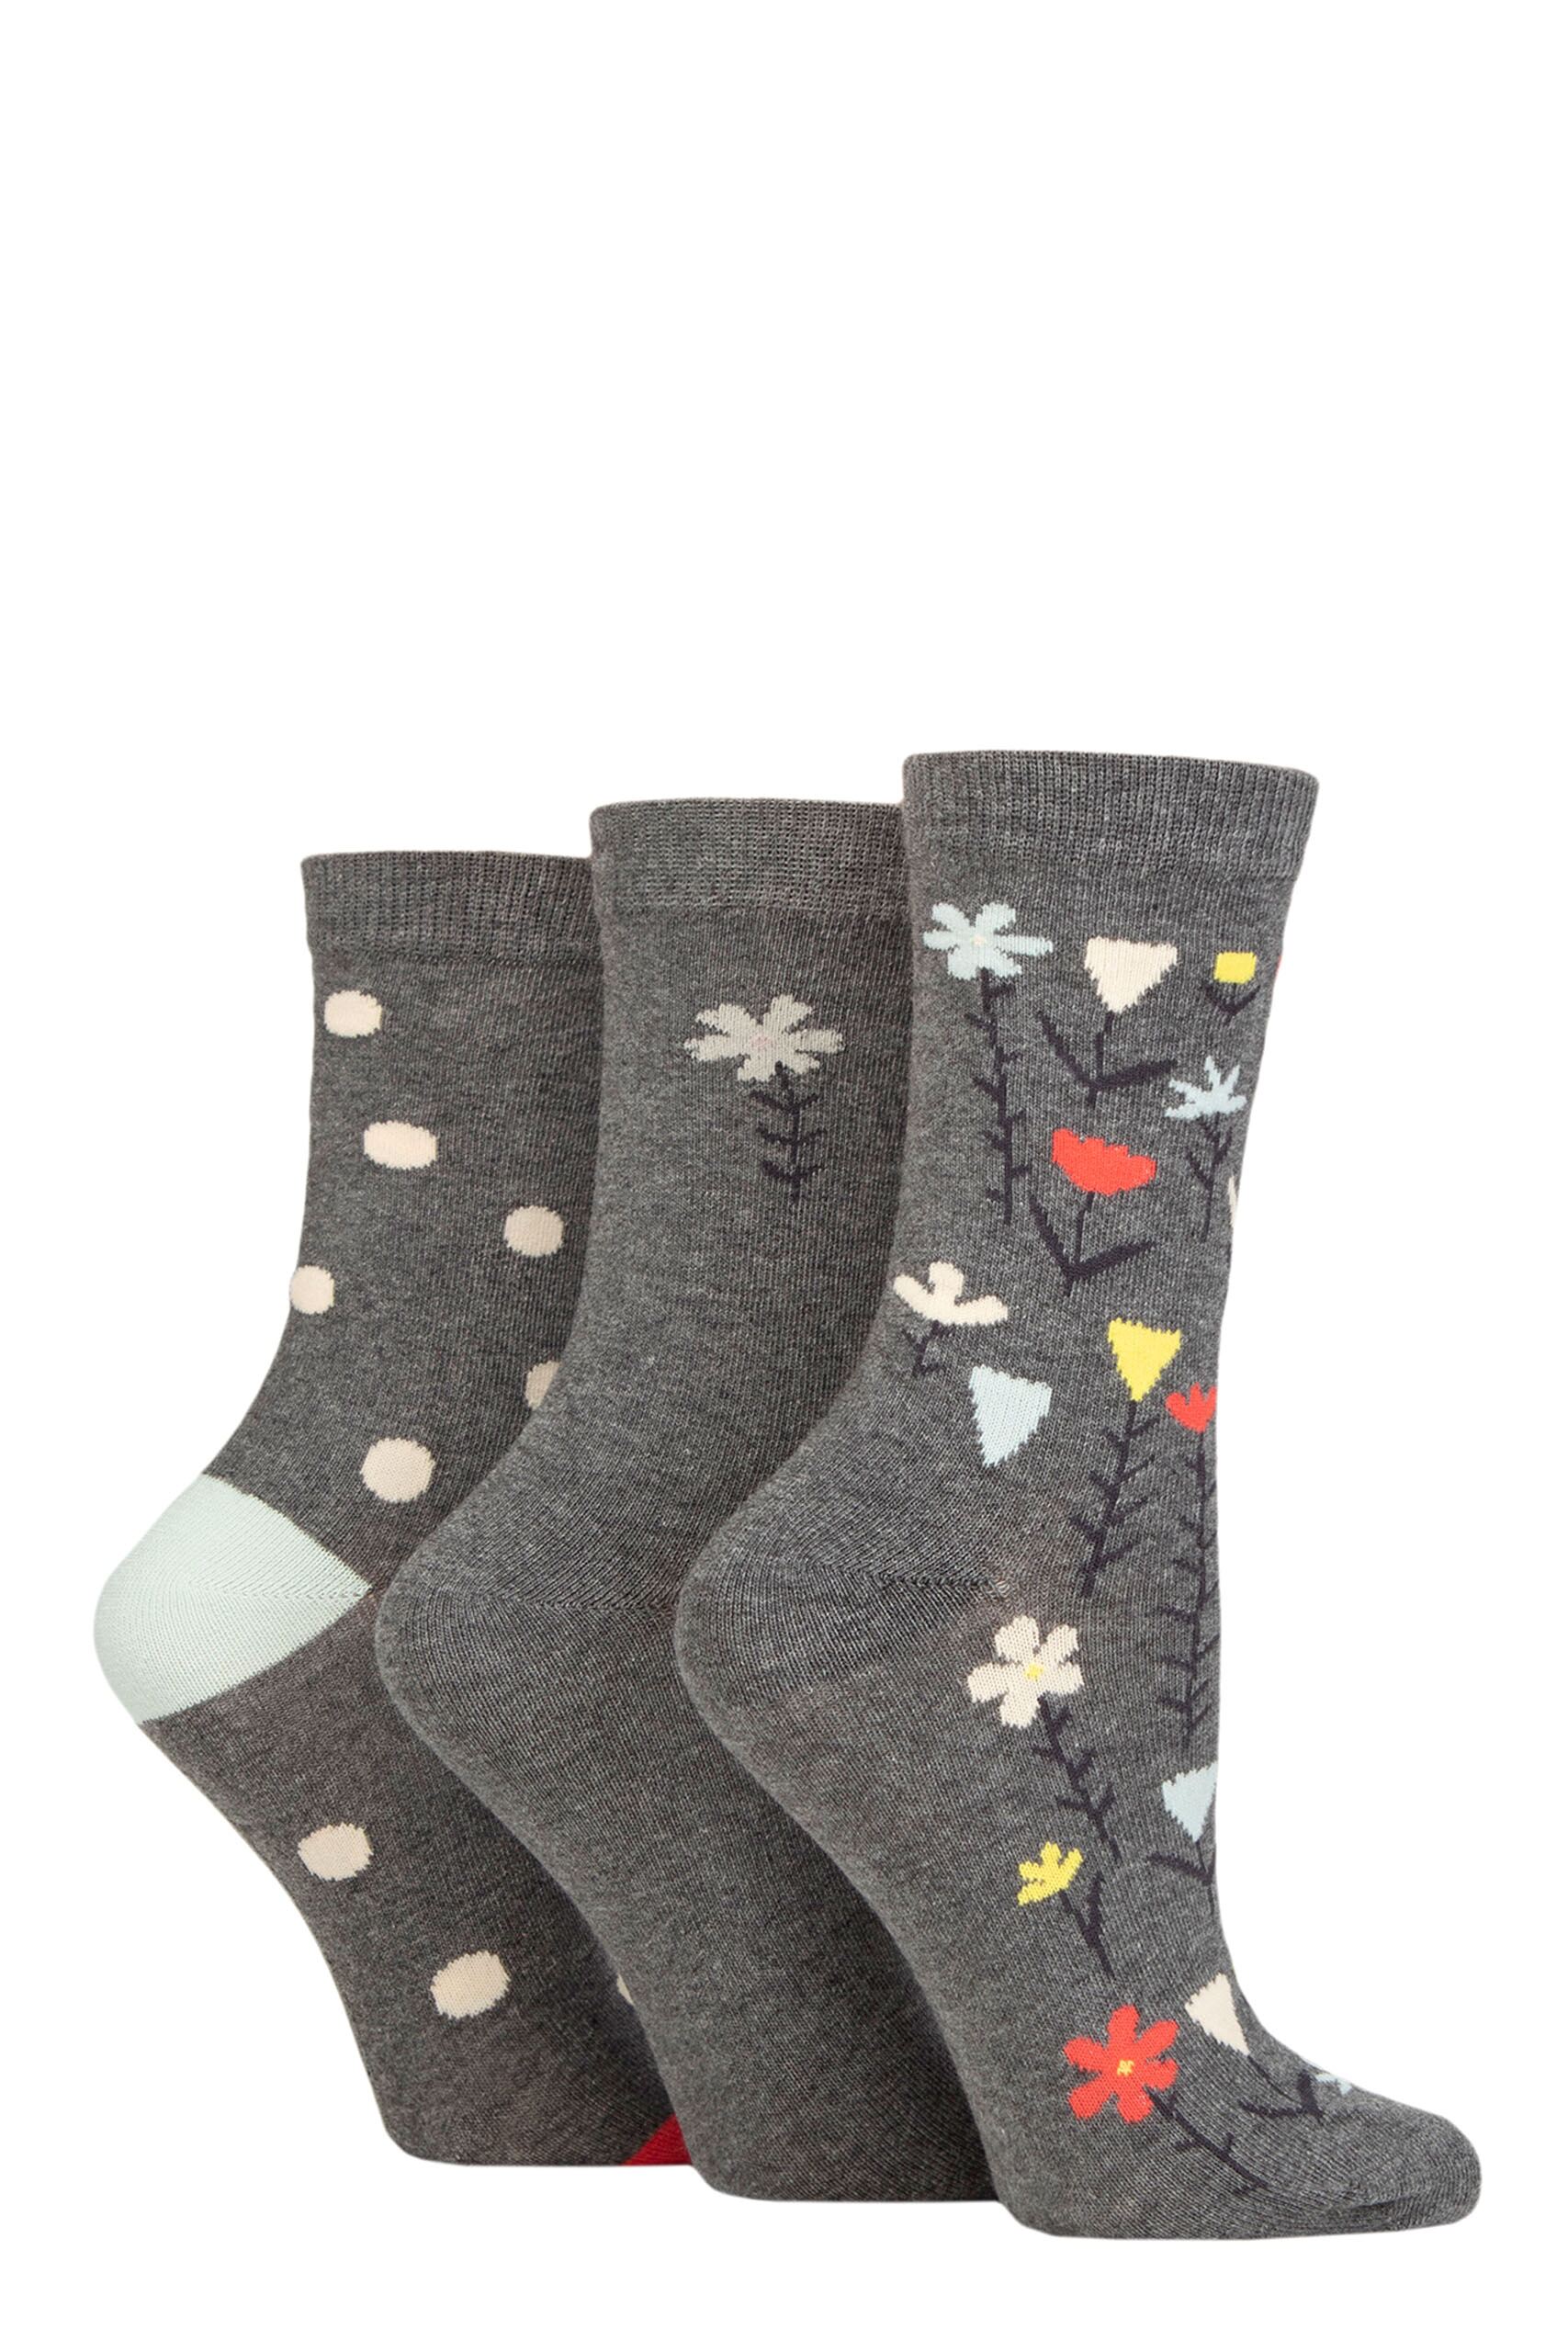 Ladies 3 Pair Caroline Gardner Patterned Cotton Socks Floral Charcoal UK 4-8